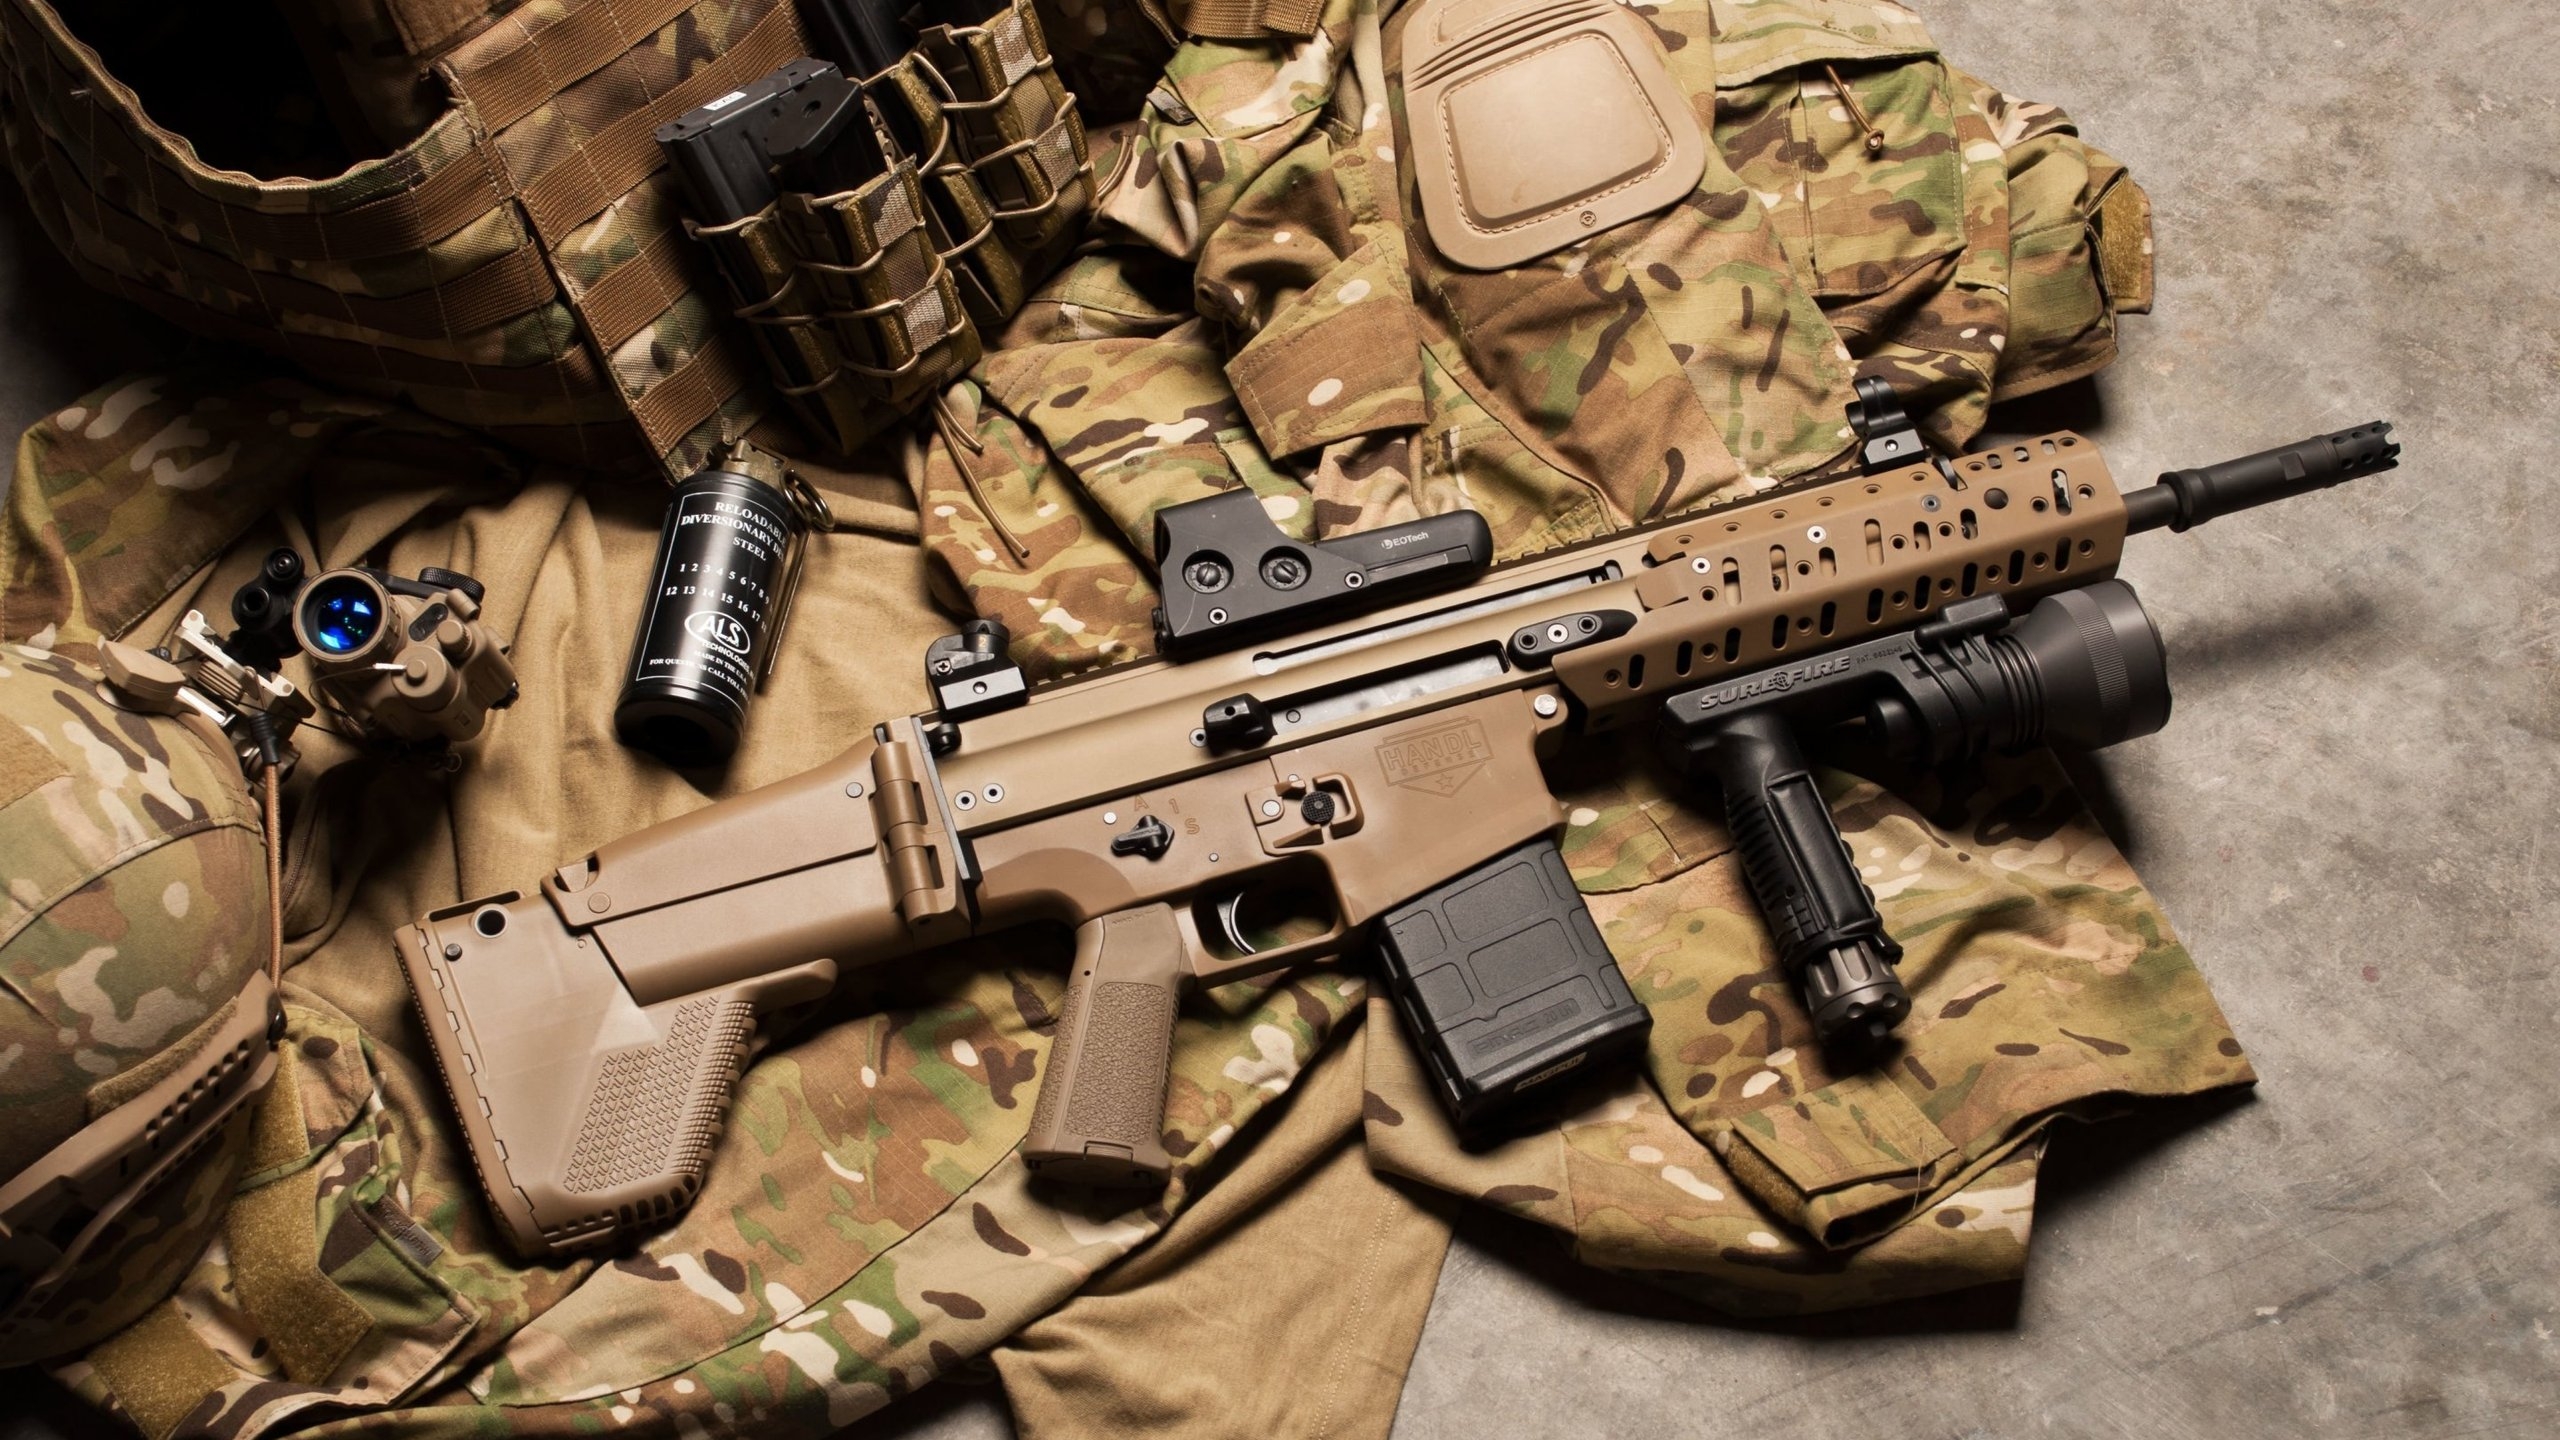 FN Scar Assault Rifle for 2560x1440 HDTV resolution